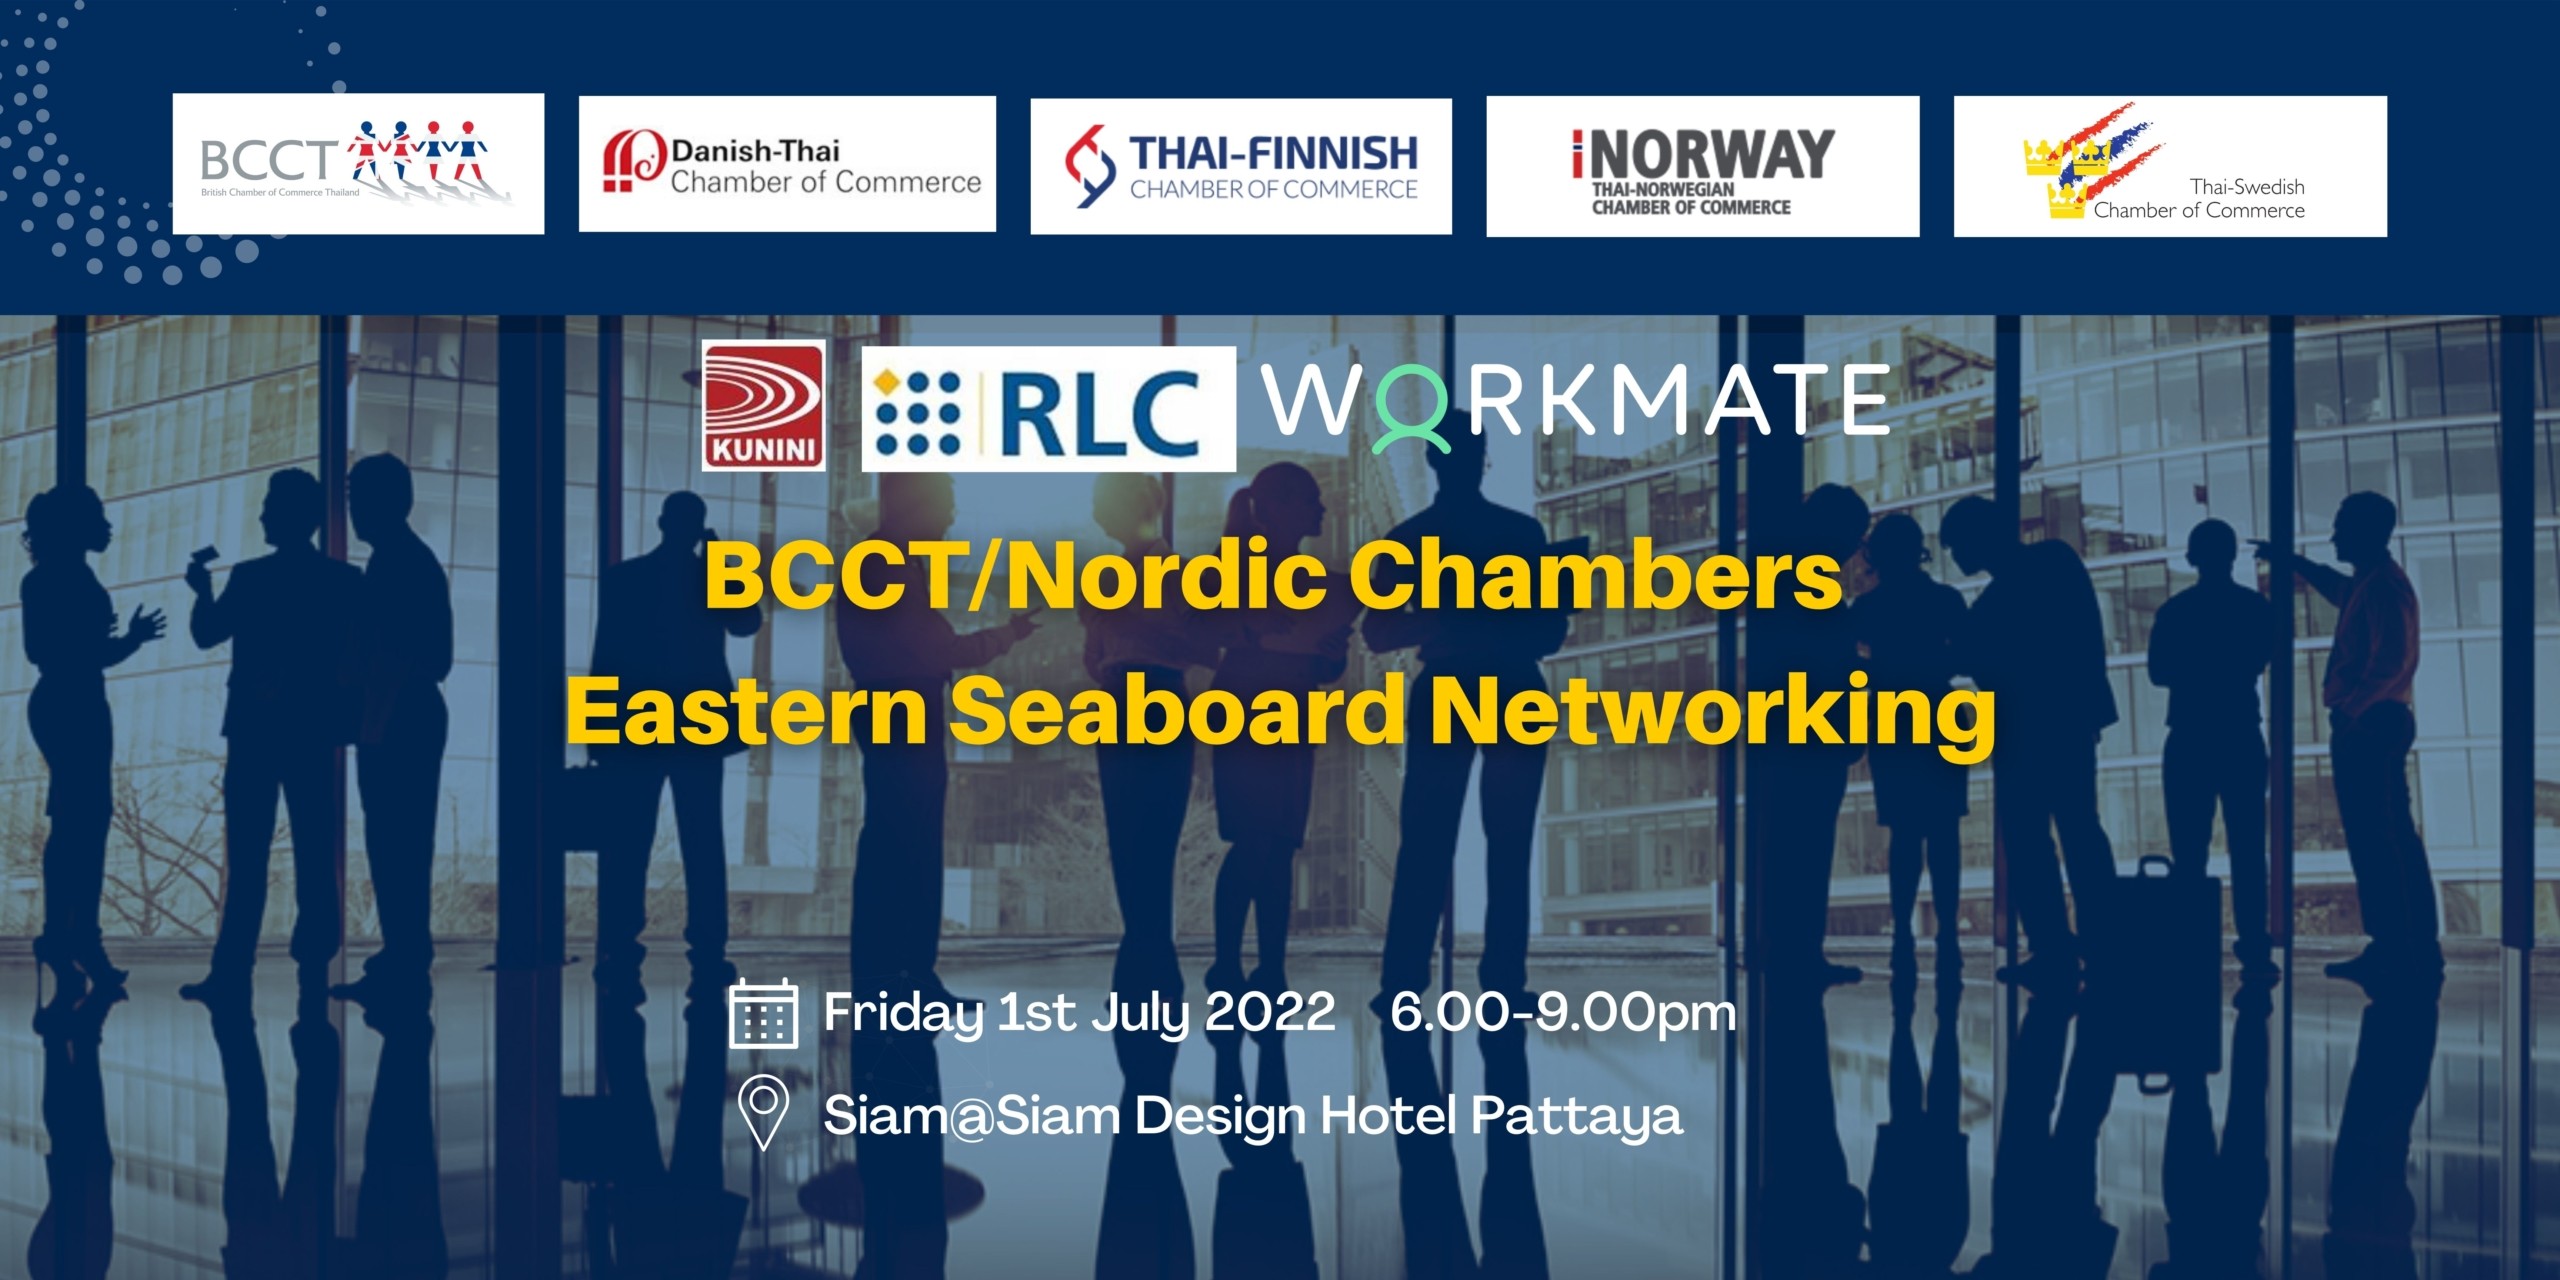 BCCT & NORDIC CHAMBERS EASTERN SEABOARD NETWORKING